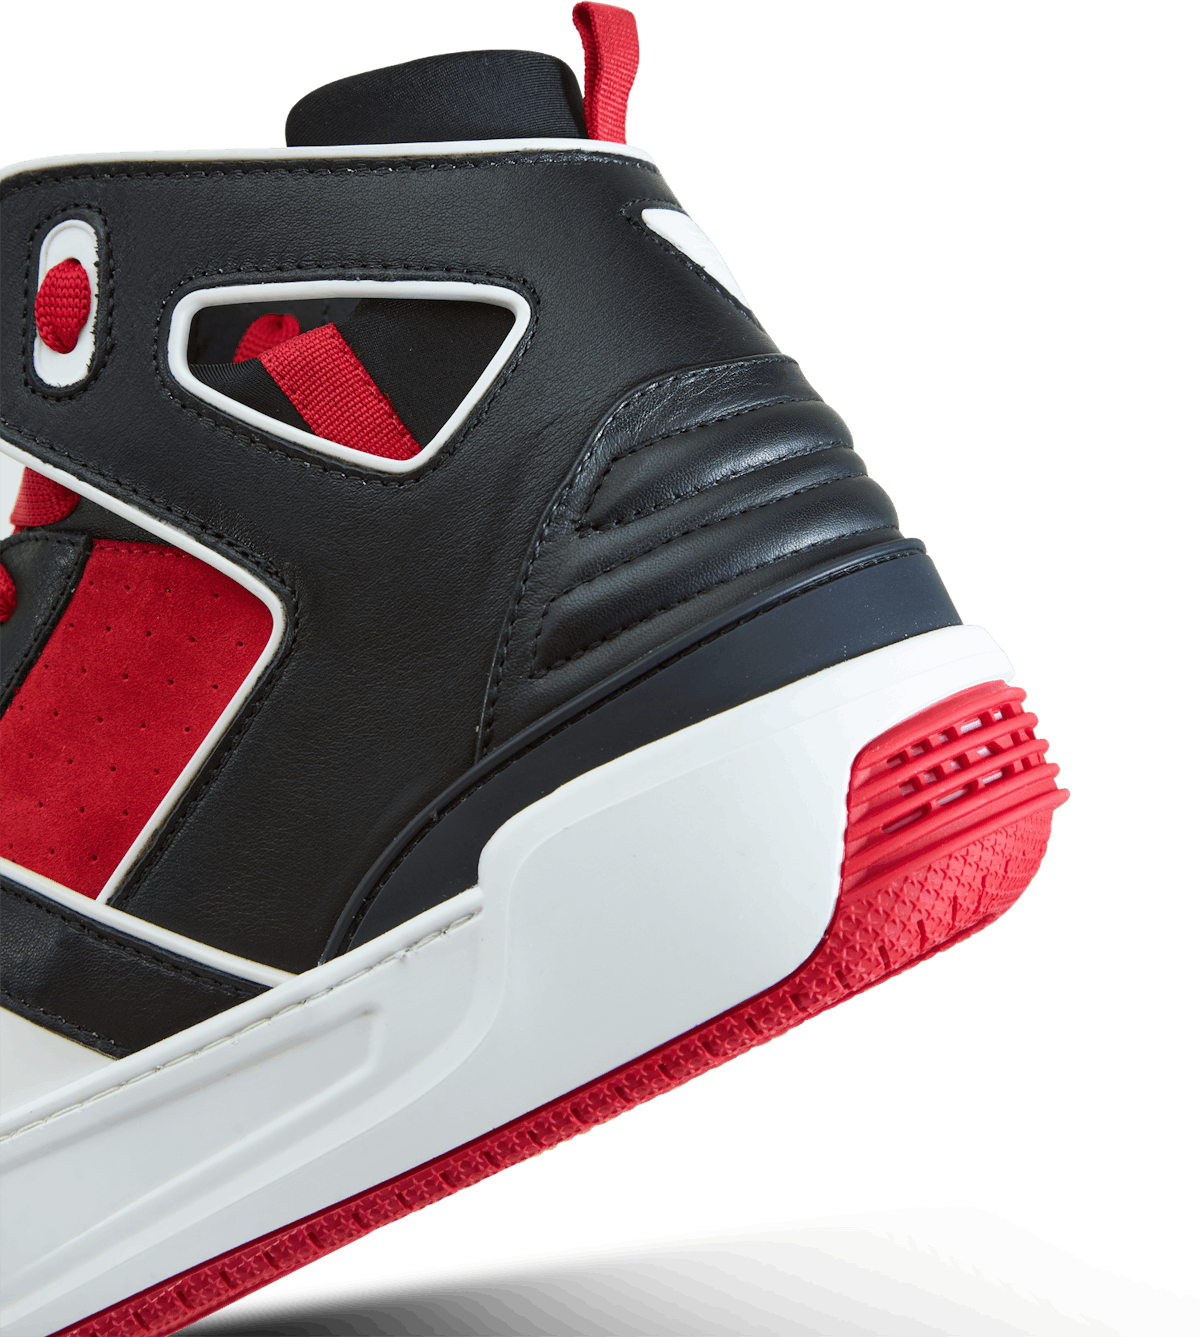 Basketball Jd1/shoes 99